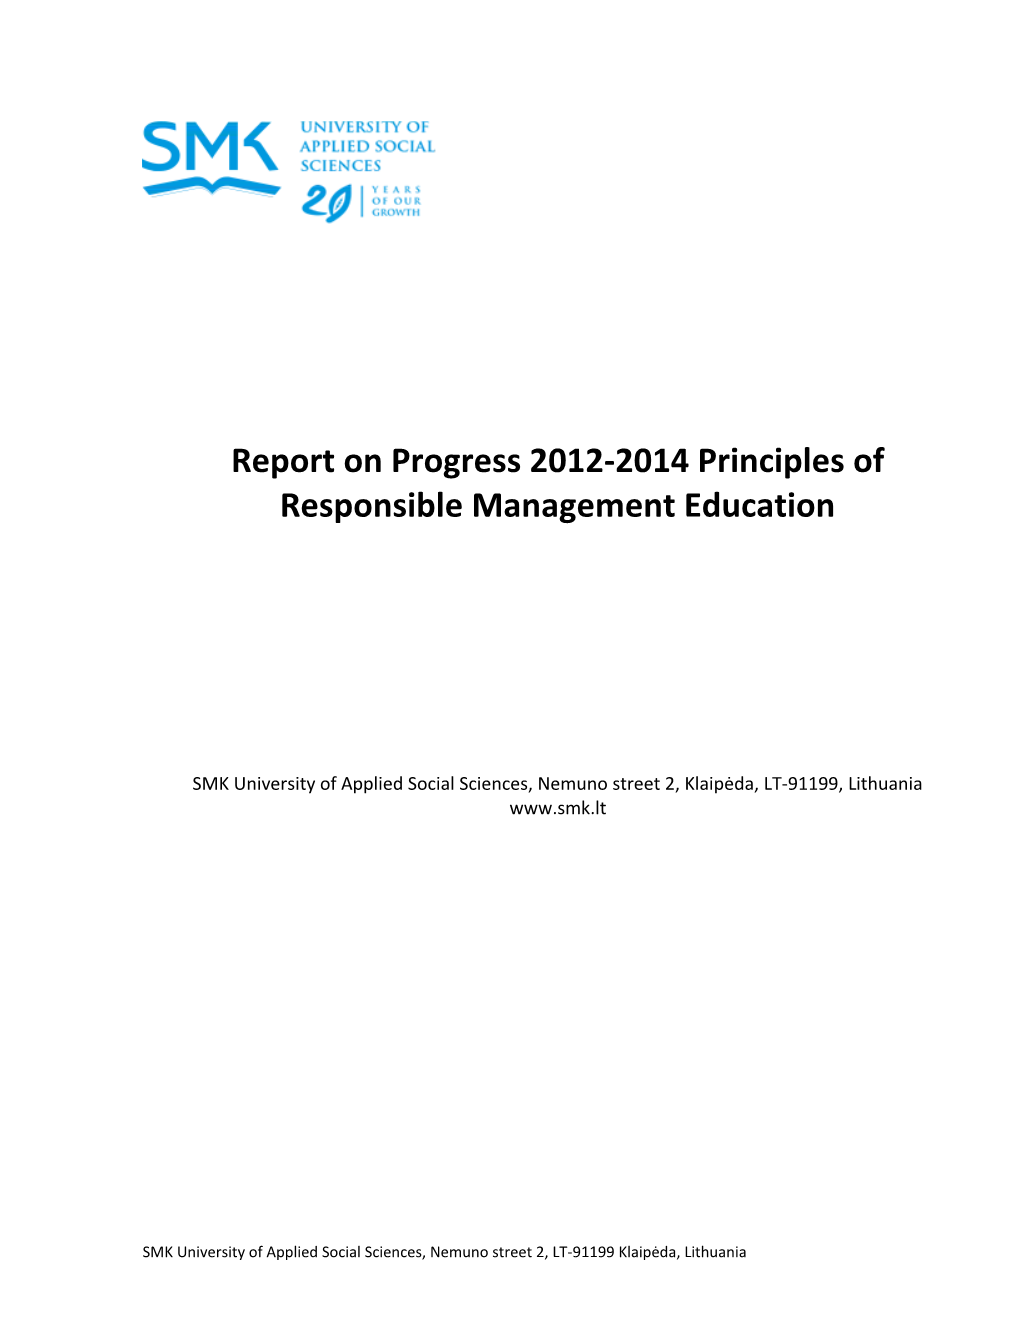 Report on Progress 2012-2014 Principles of Responsible Management Education